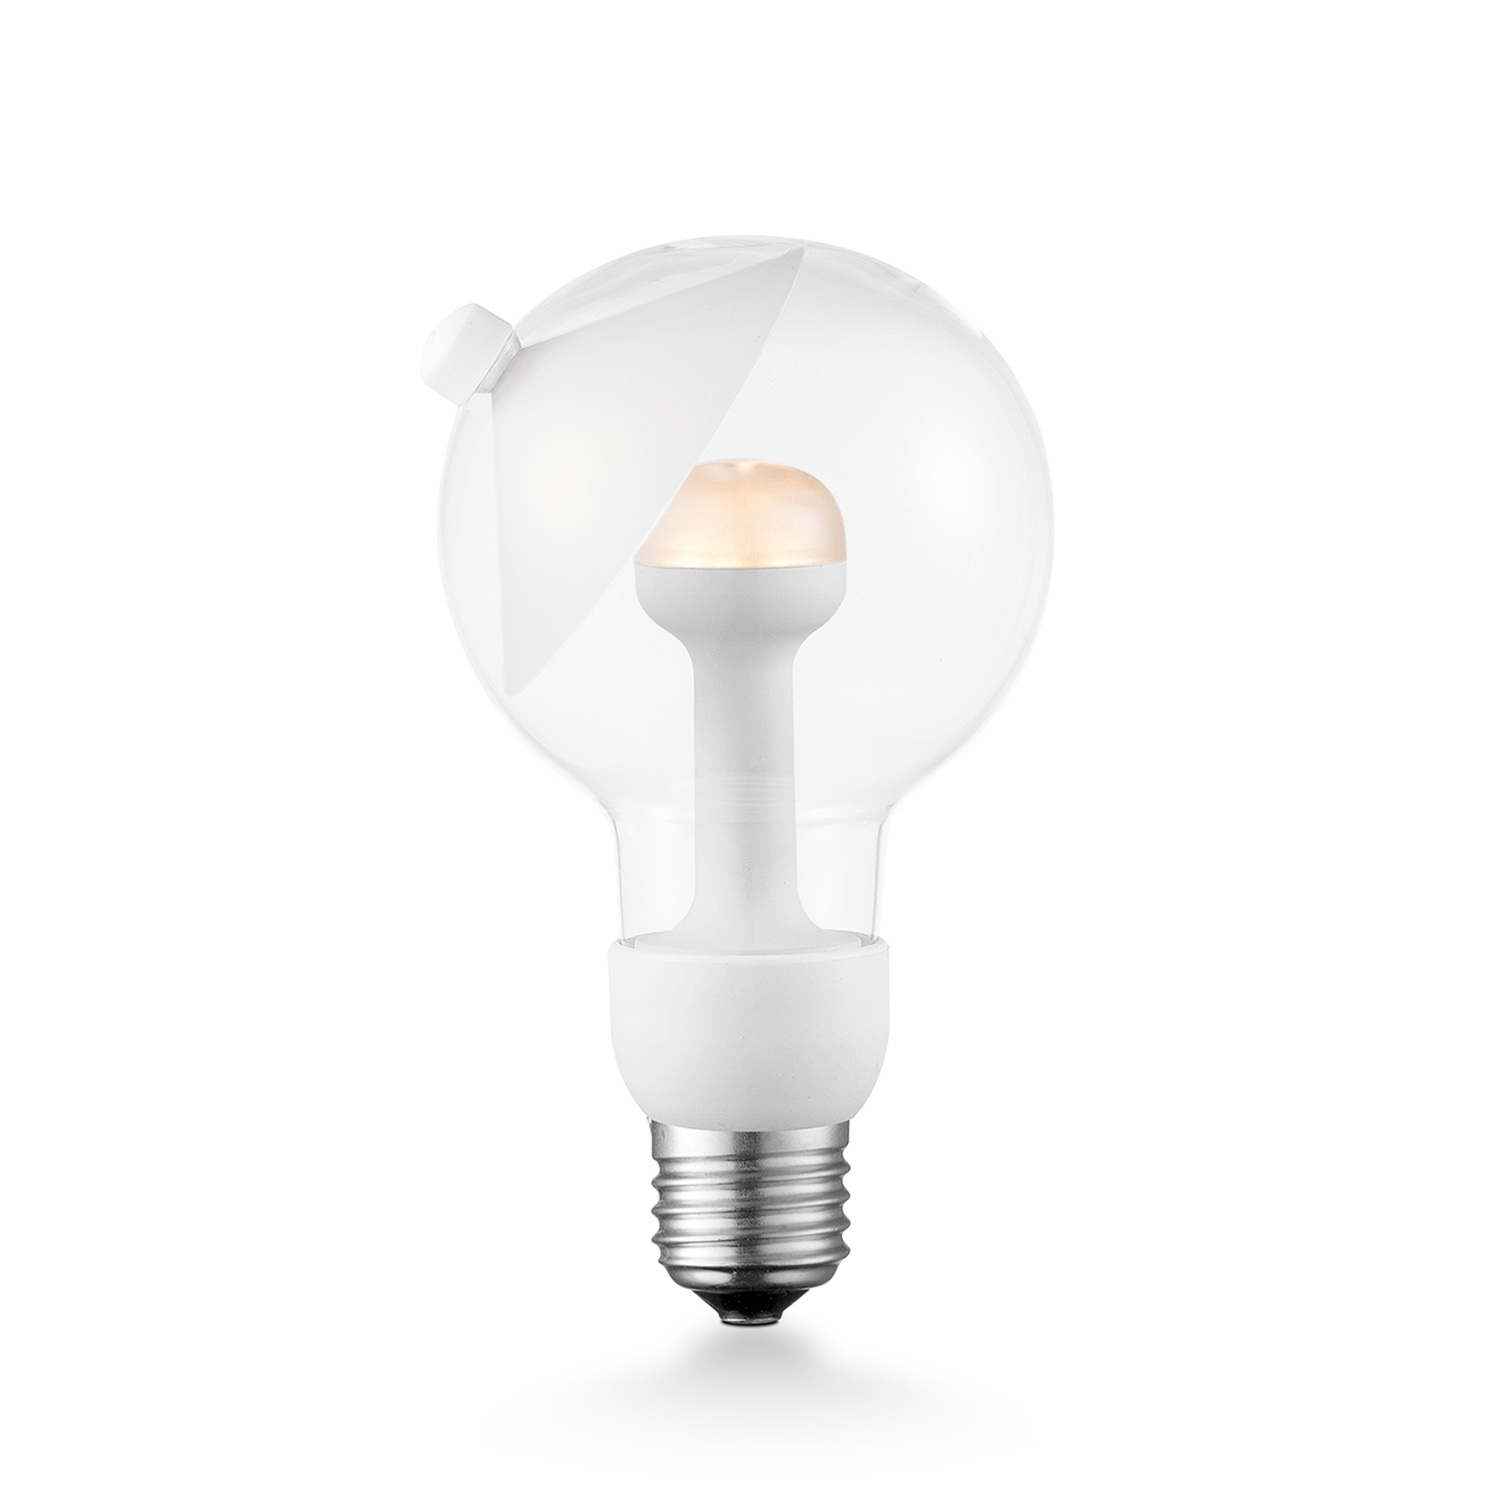 Tangla lighting - 0371-01-N - LED Light Bulb Move me - G80 3W Cone white - E27 / E26